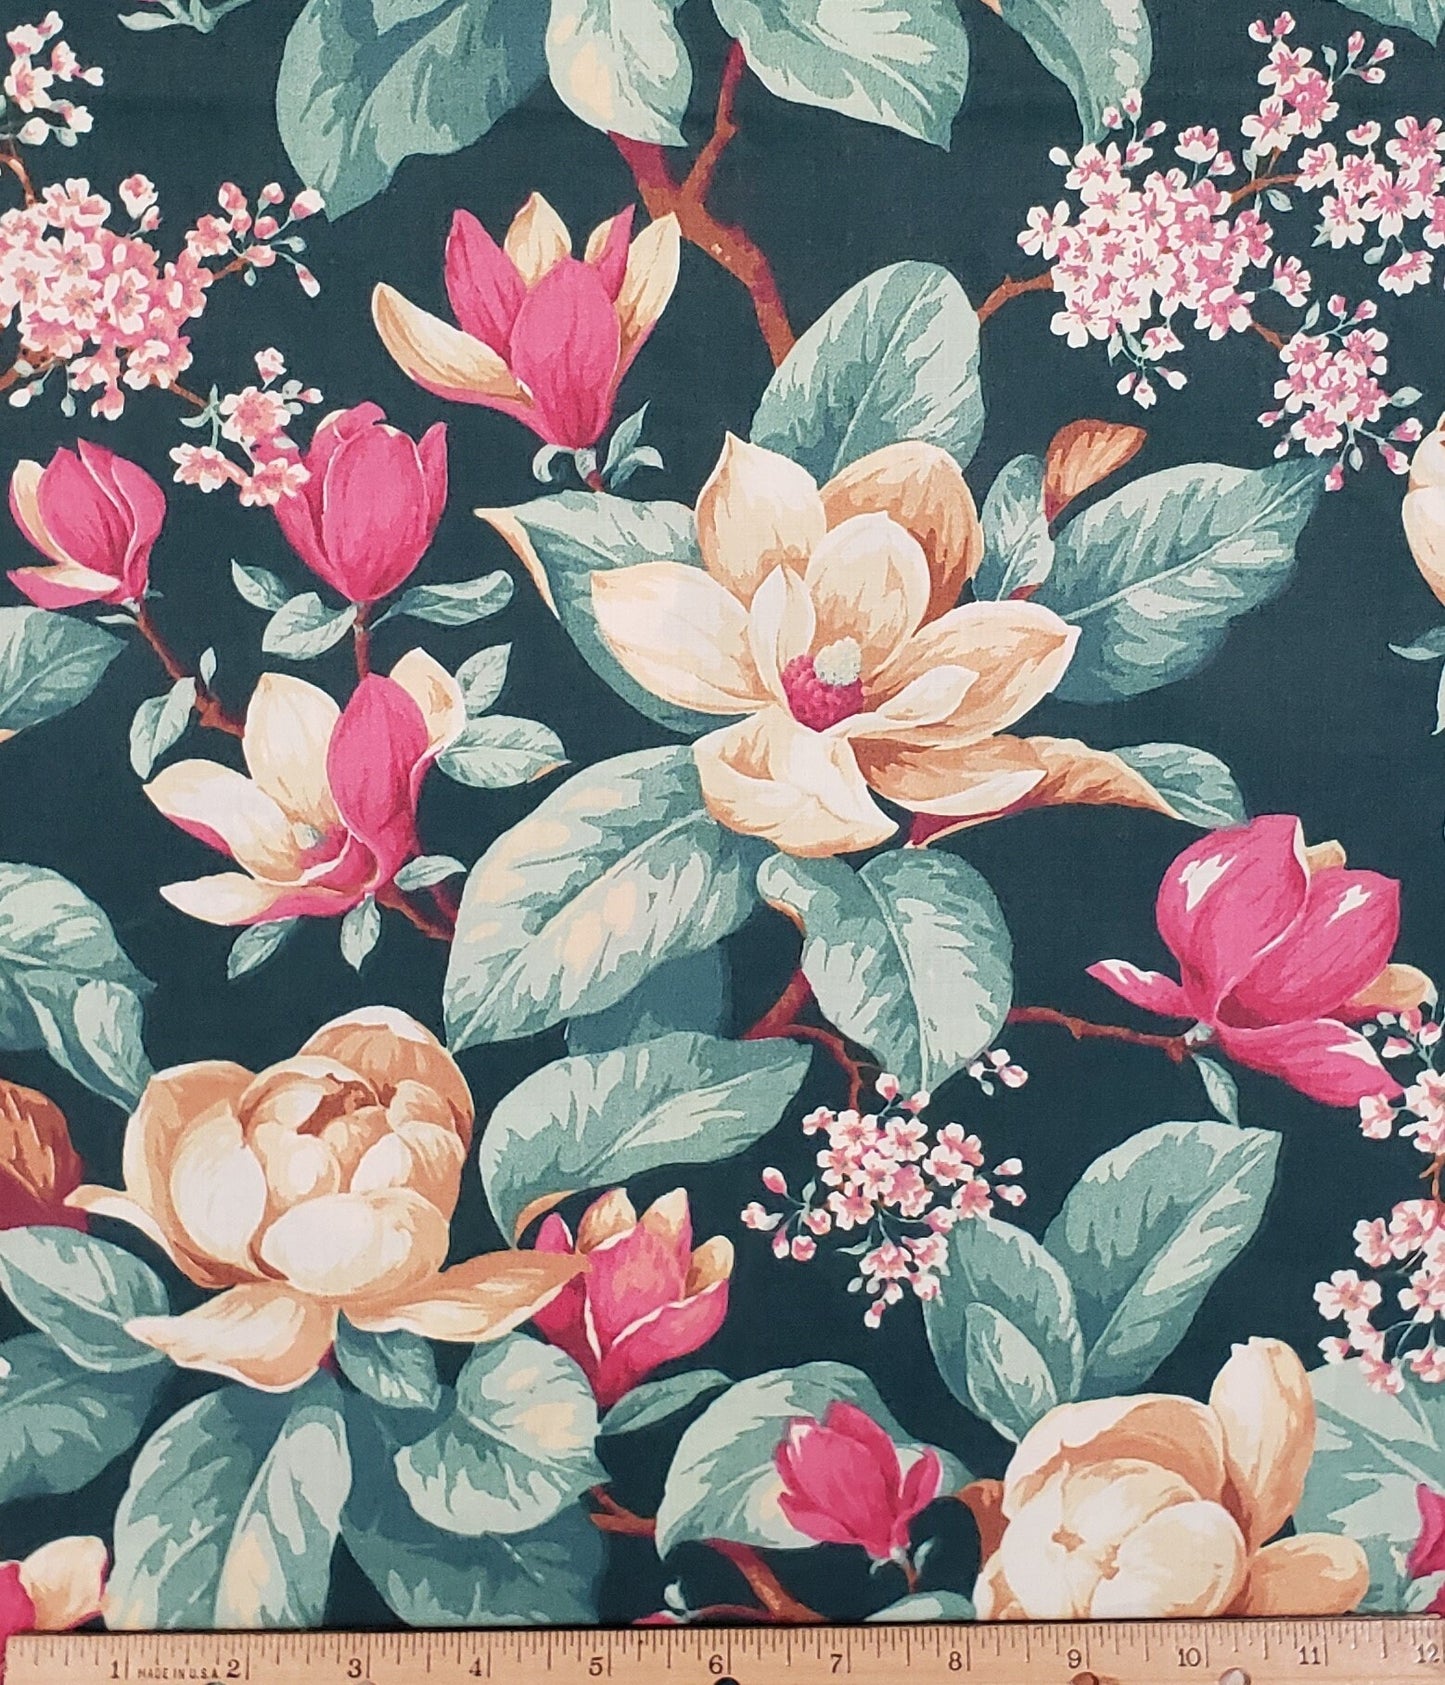 Sharon Kessler for Concord Fabrics - Dark Green Fabric / Large White and Pink Flower Print